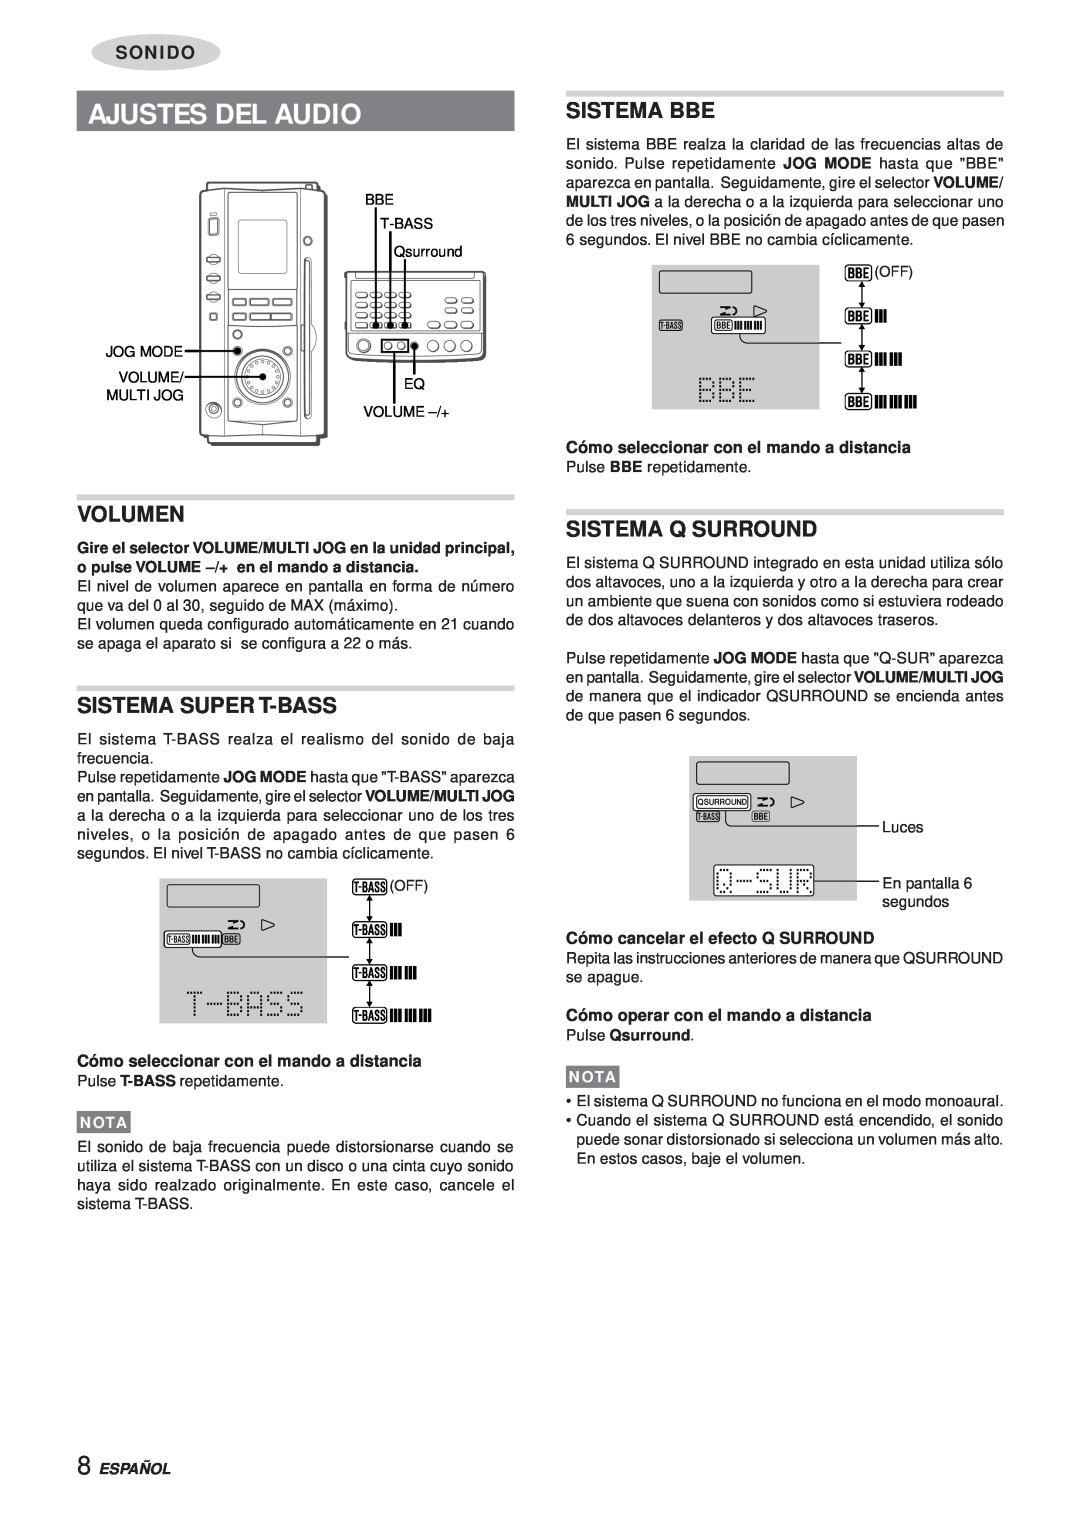 Aiwa XR-MS3 manual Ajustes Del Audio, Volumen, Sistema Super T-Bass, Sistema Bbe, Sistema Q Surround, Español, Sonido, Nota 